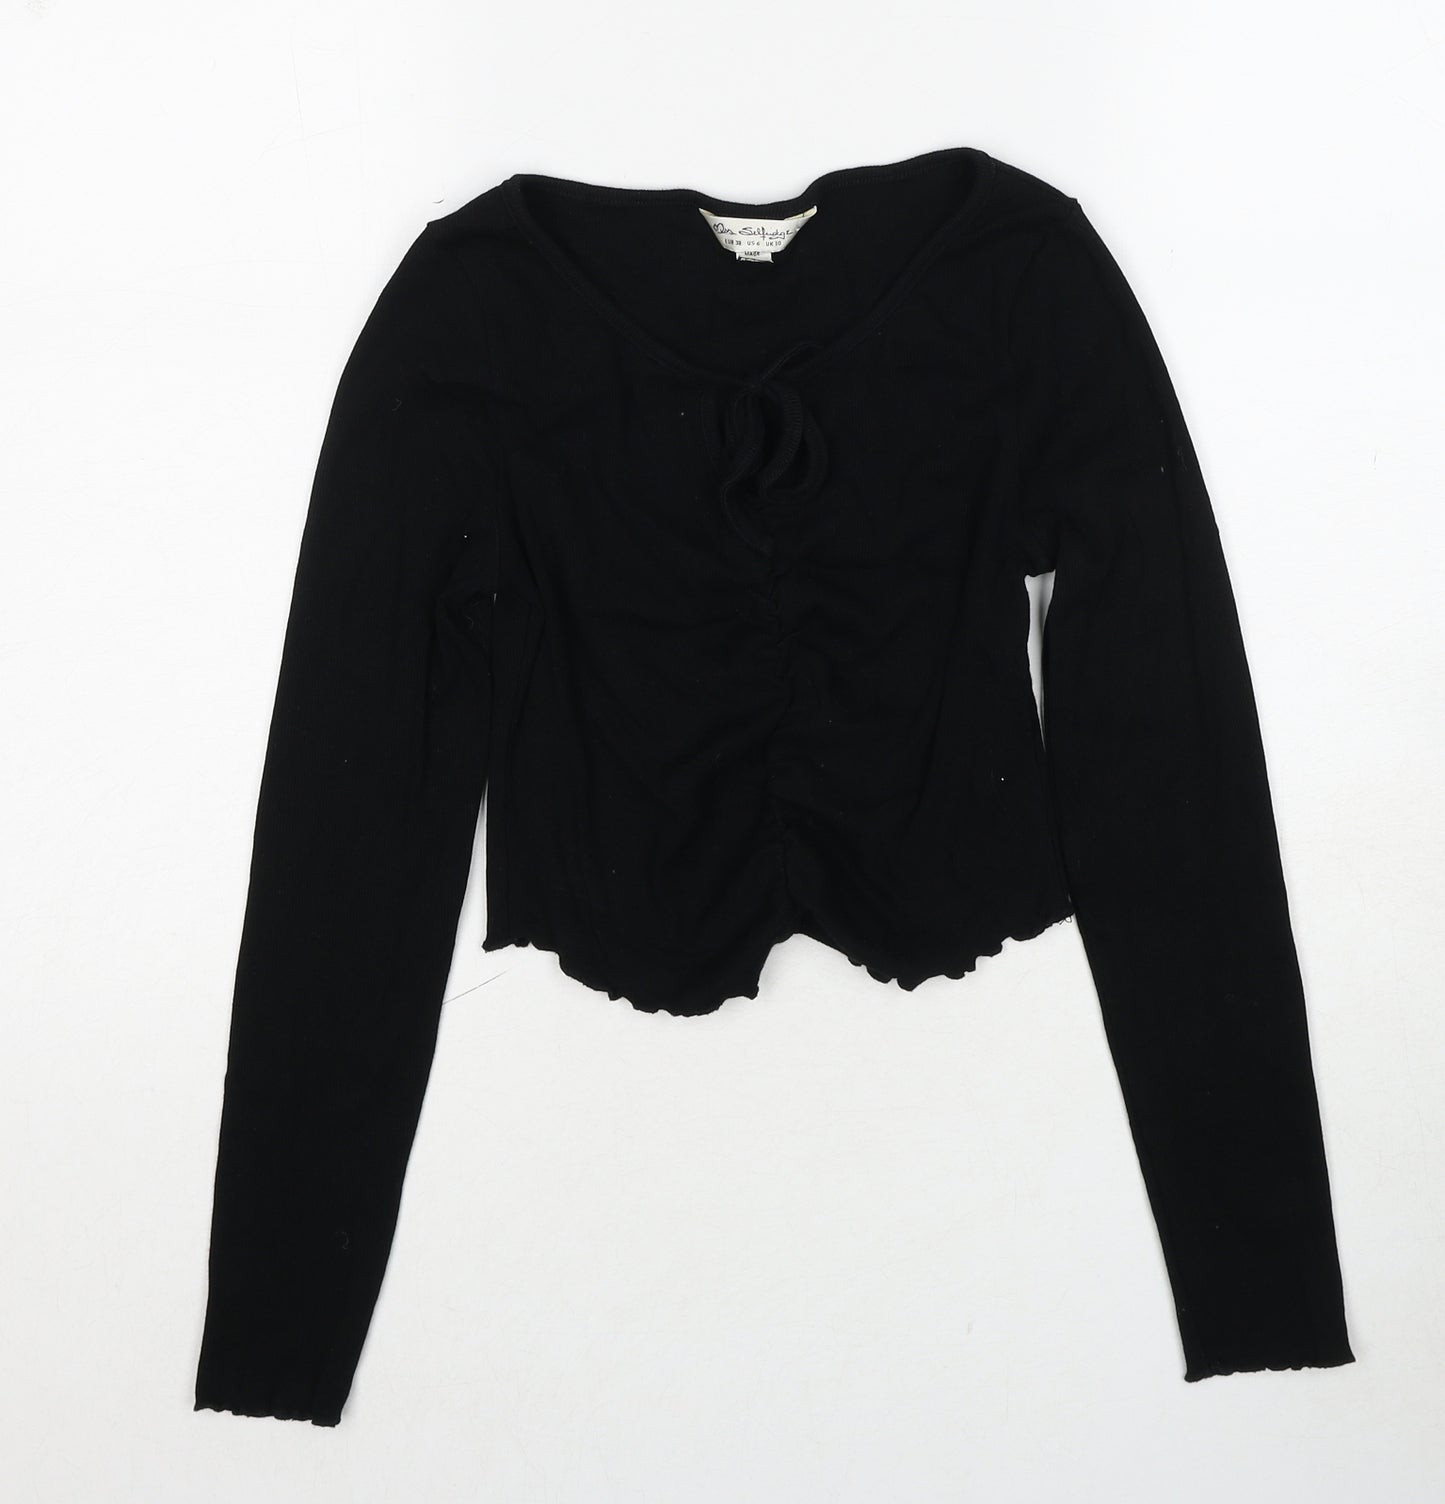 Miss Selfridge Womens Black Cotton Basic Blouse Size 10 Round Neck